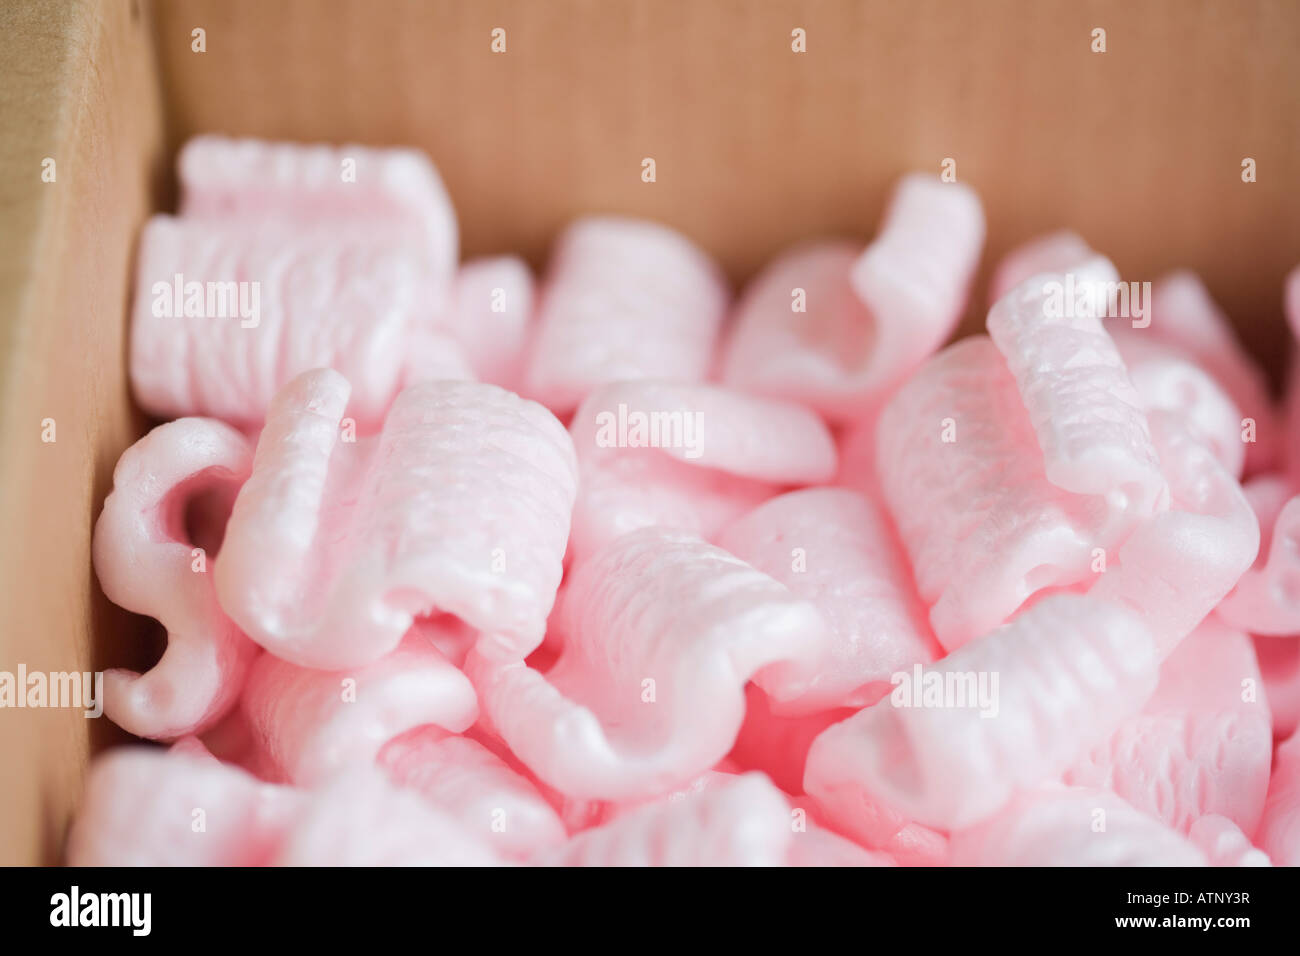 Detail of pink styrofoam packing material Stock Photo